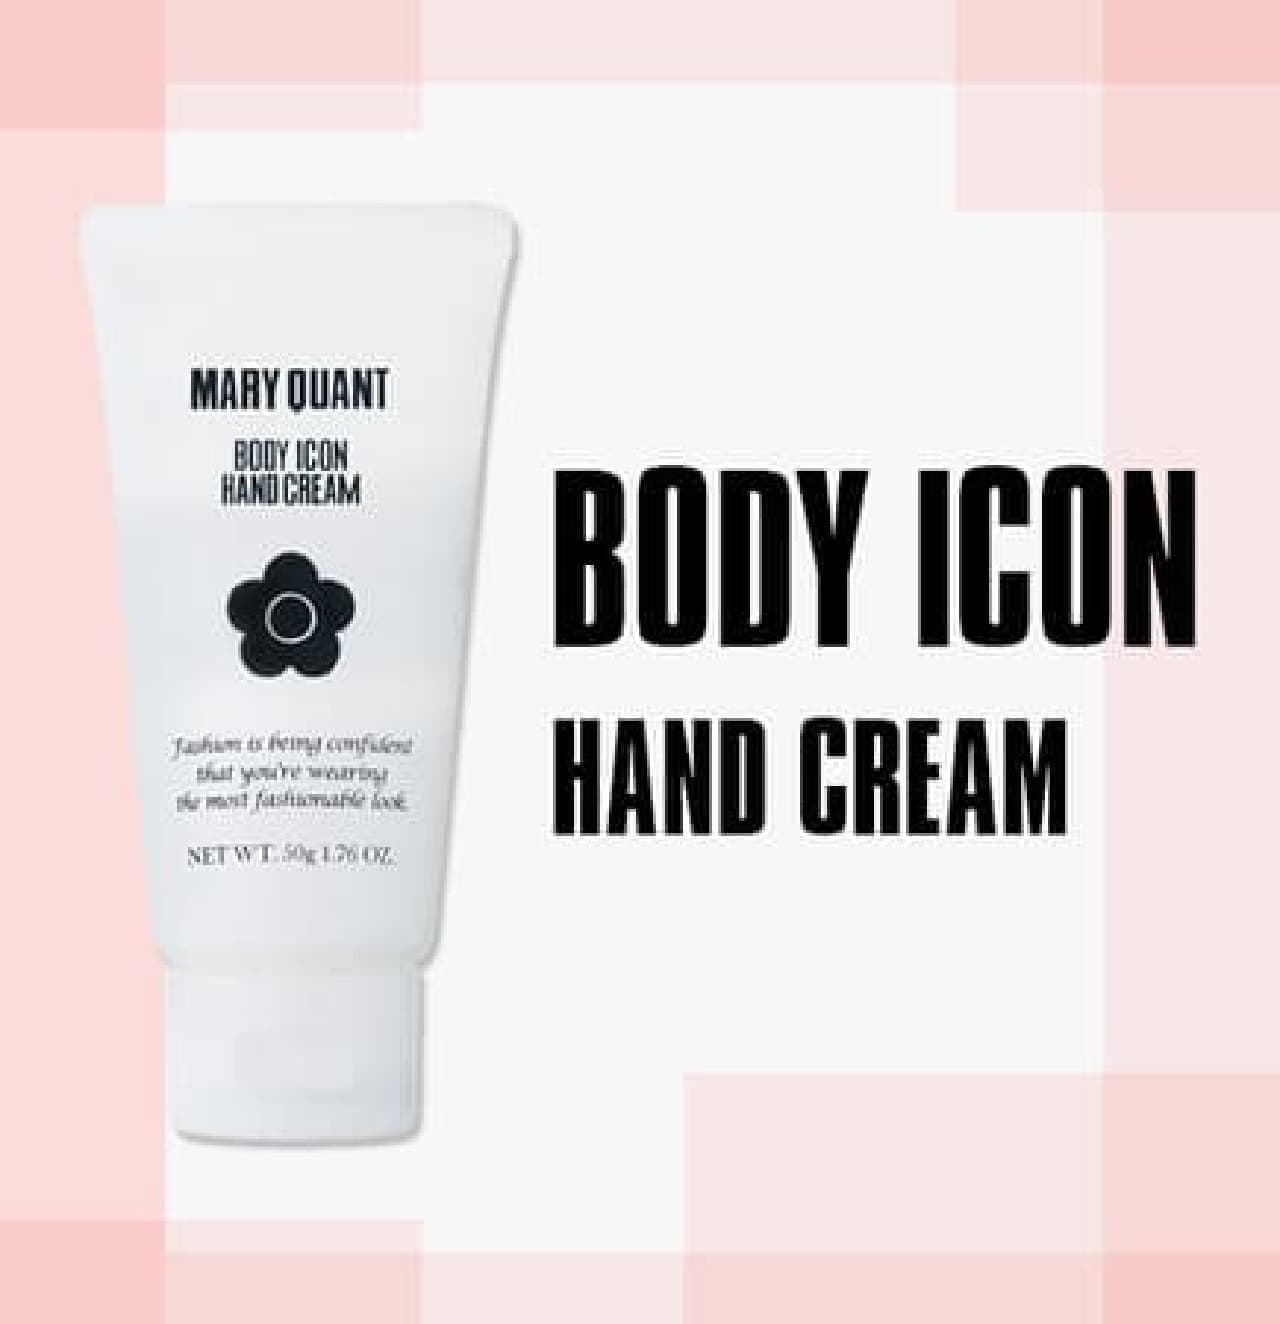 Mary Quant "Body Icon Hand Cream"